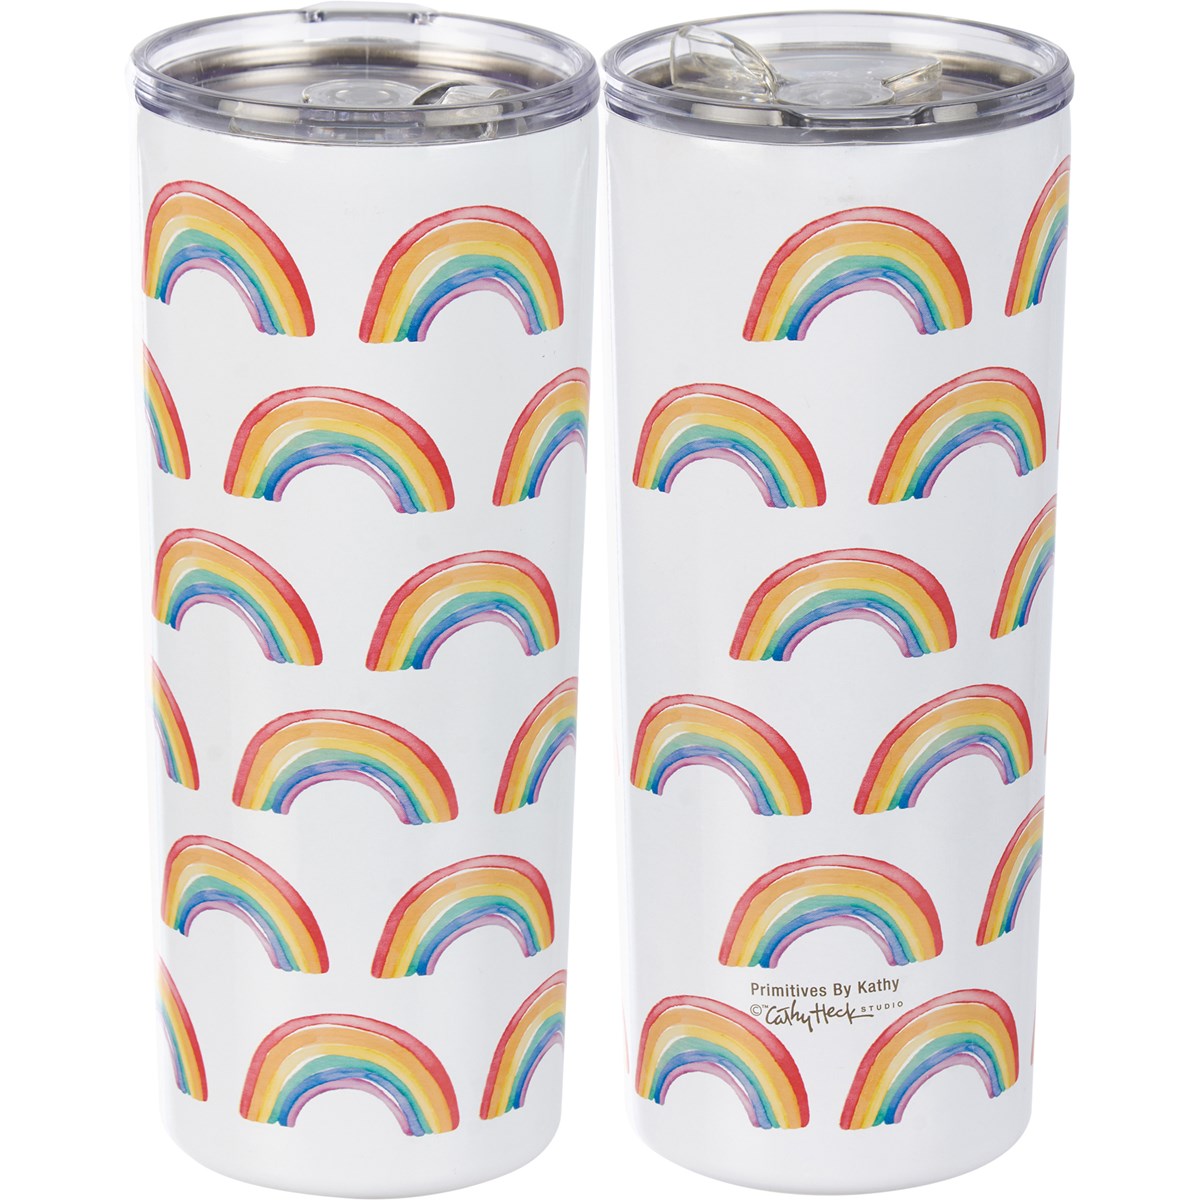 Coffee Tumbler - Rainbow Pattern - 20 oz., 3" Diameter x 7.75" - Stainless Steel, Plastic